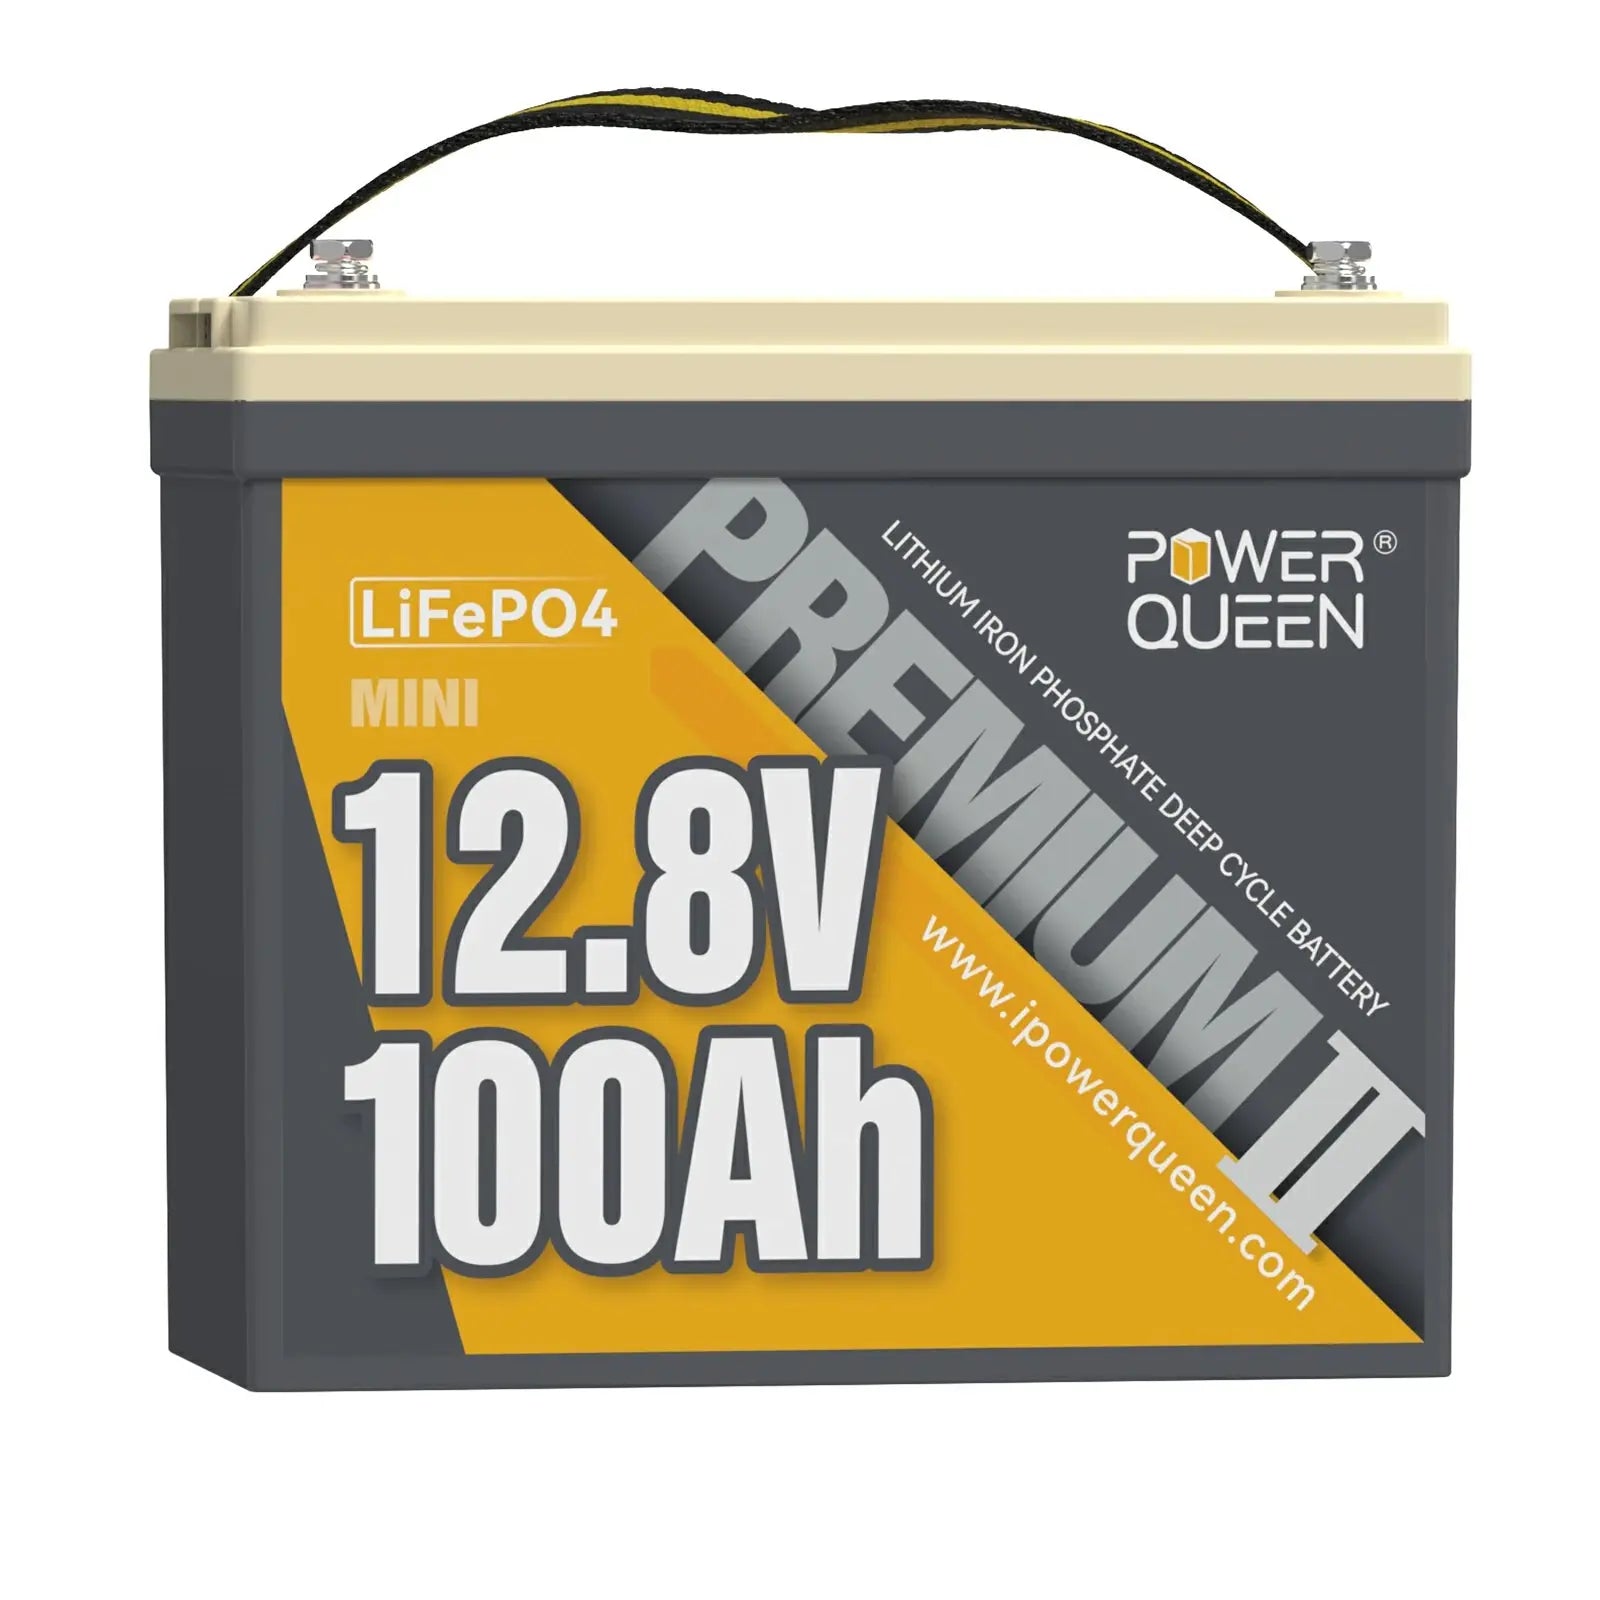 【Like New】Power Queen 12.8V 100Ah Mini(Premium II) LiFePO4 Battery, Built-in 100A BMS Power Queen